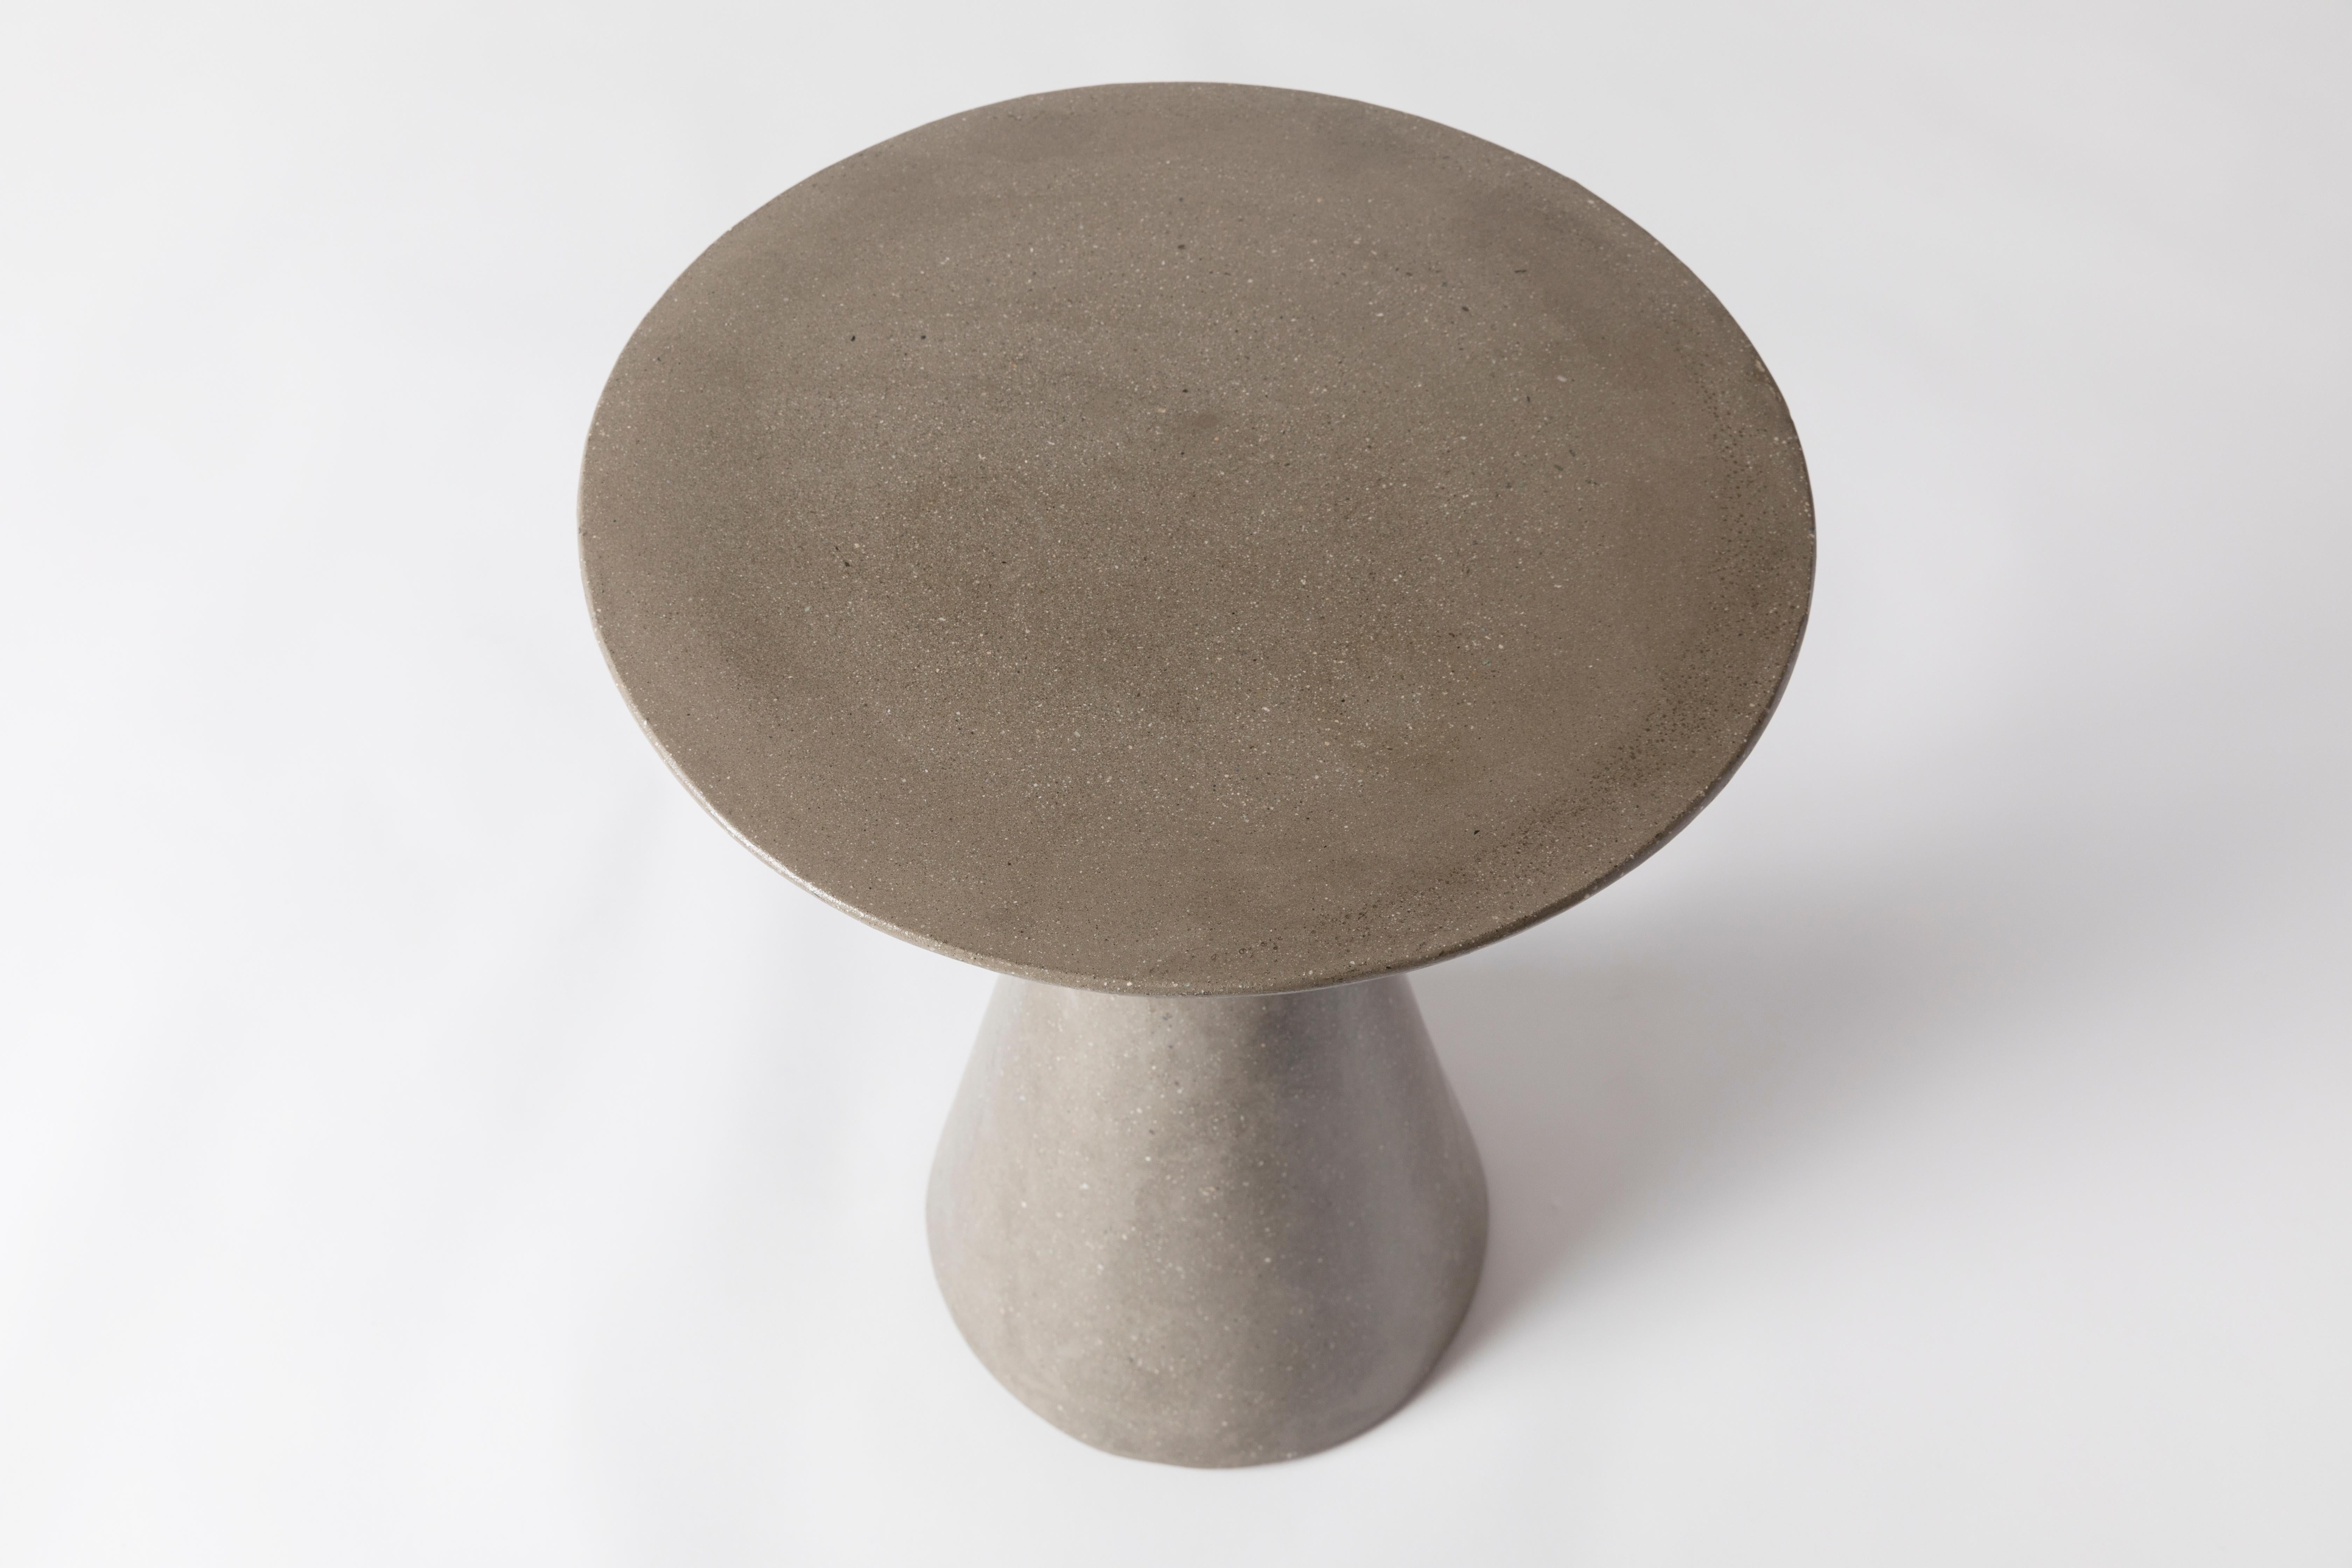 American James de Wulf Concrete Round Side Table, Premium Colors For Sale